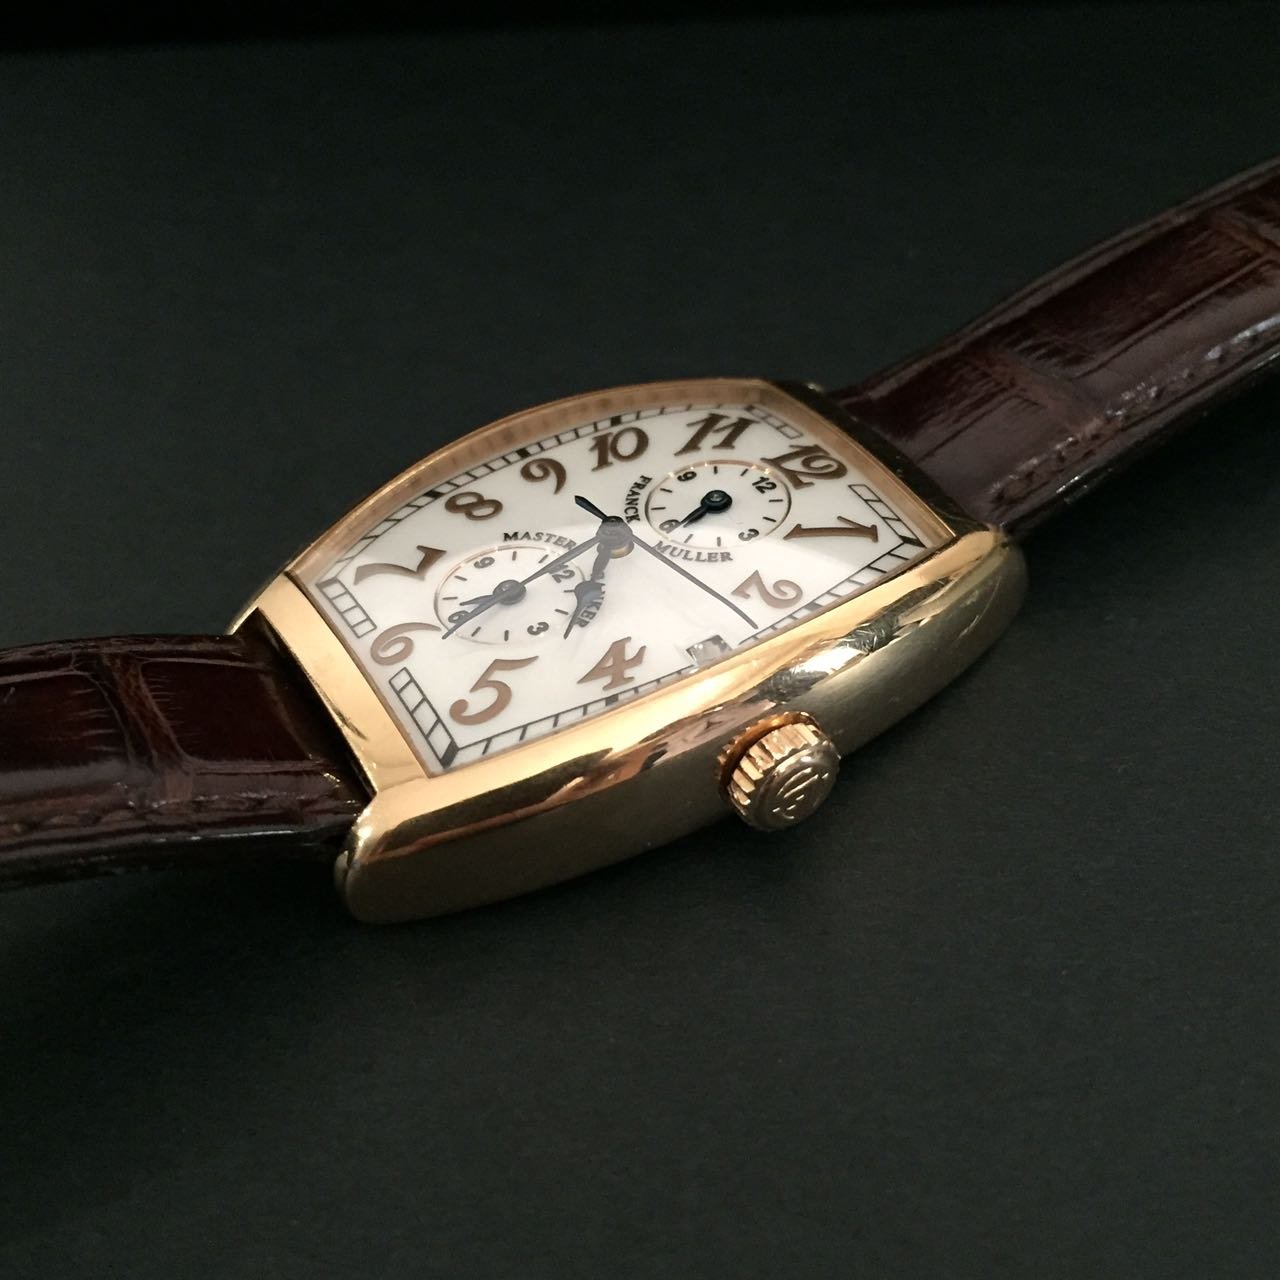 Франк мюллер часы оригинал. Франк Мюллер часы. Franck Muller Geneve 18k ручка. Золотые часы Франк Мюллер. Часы Франк Мюллер 3148.